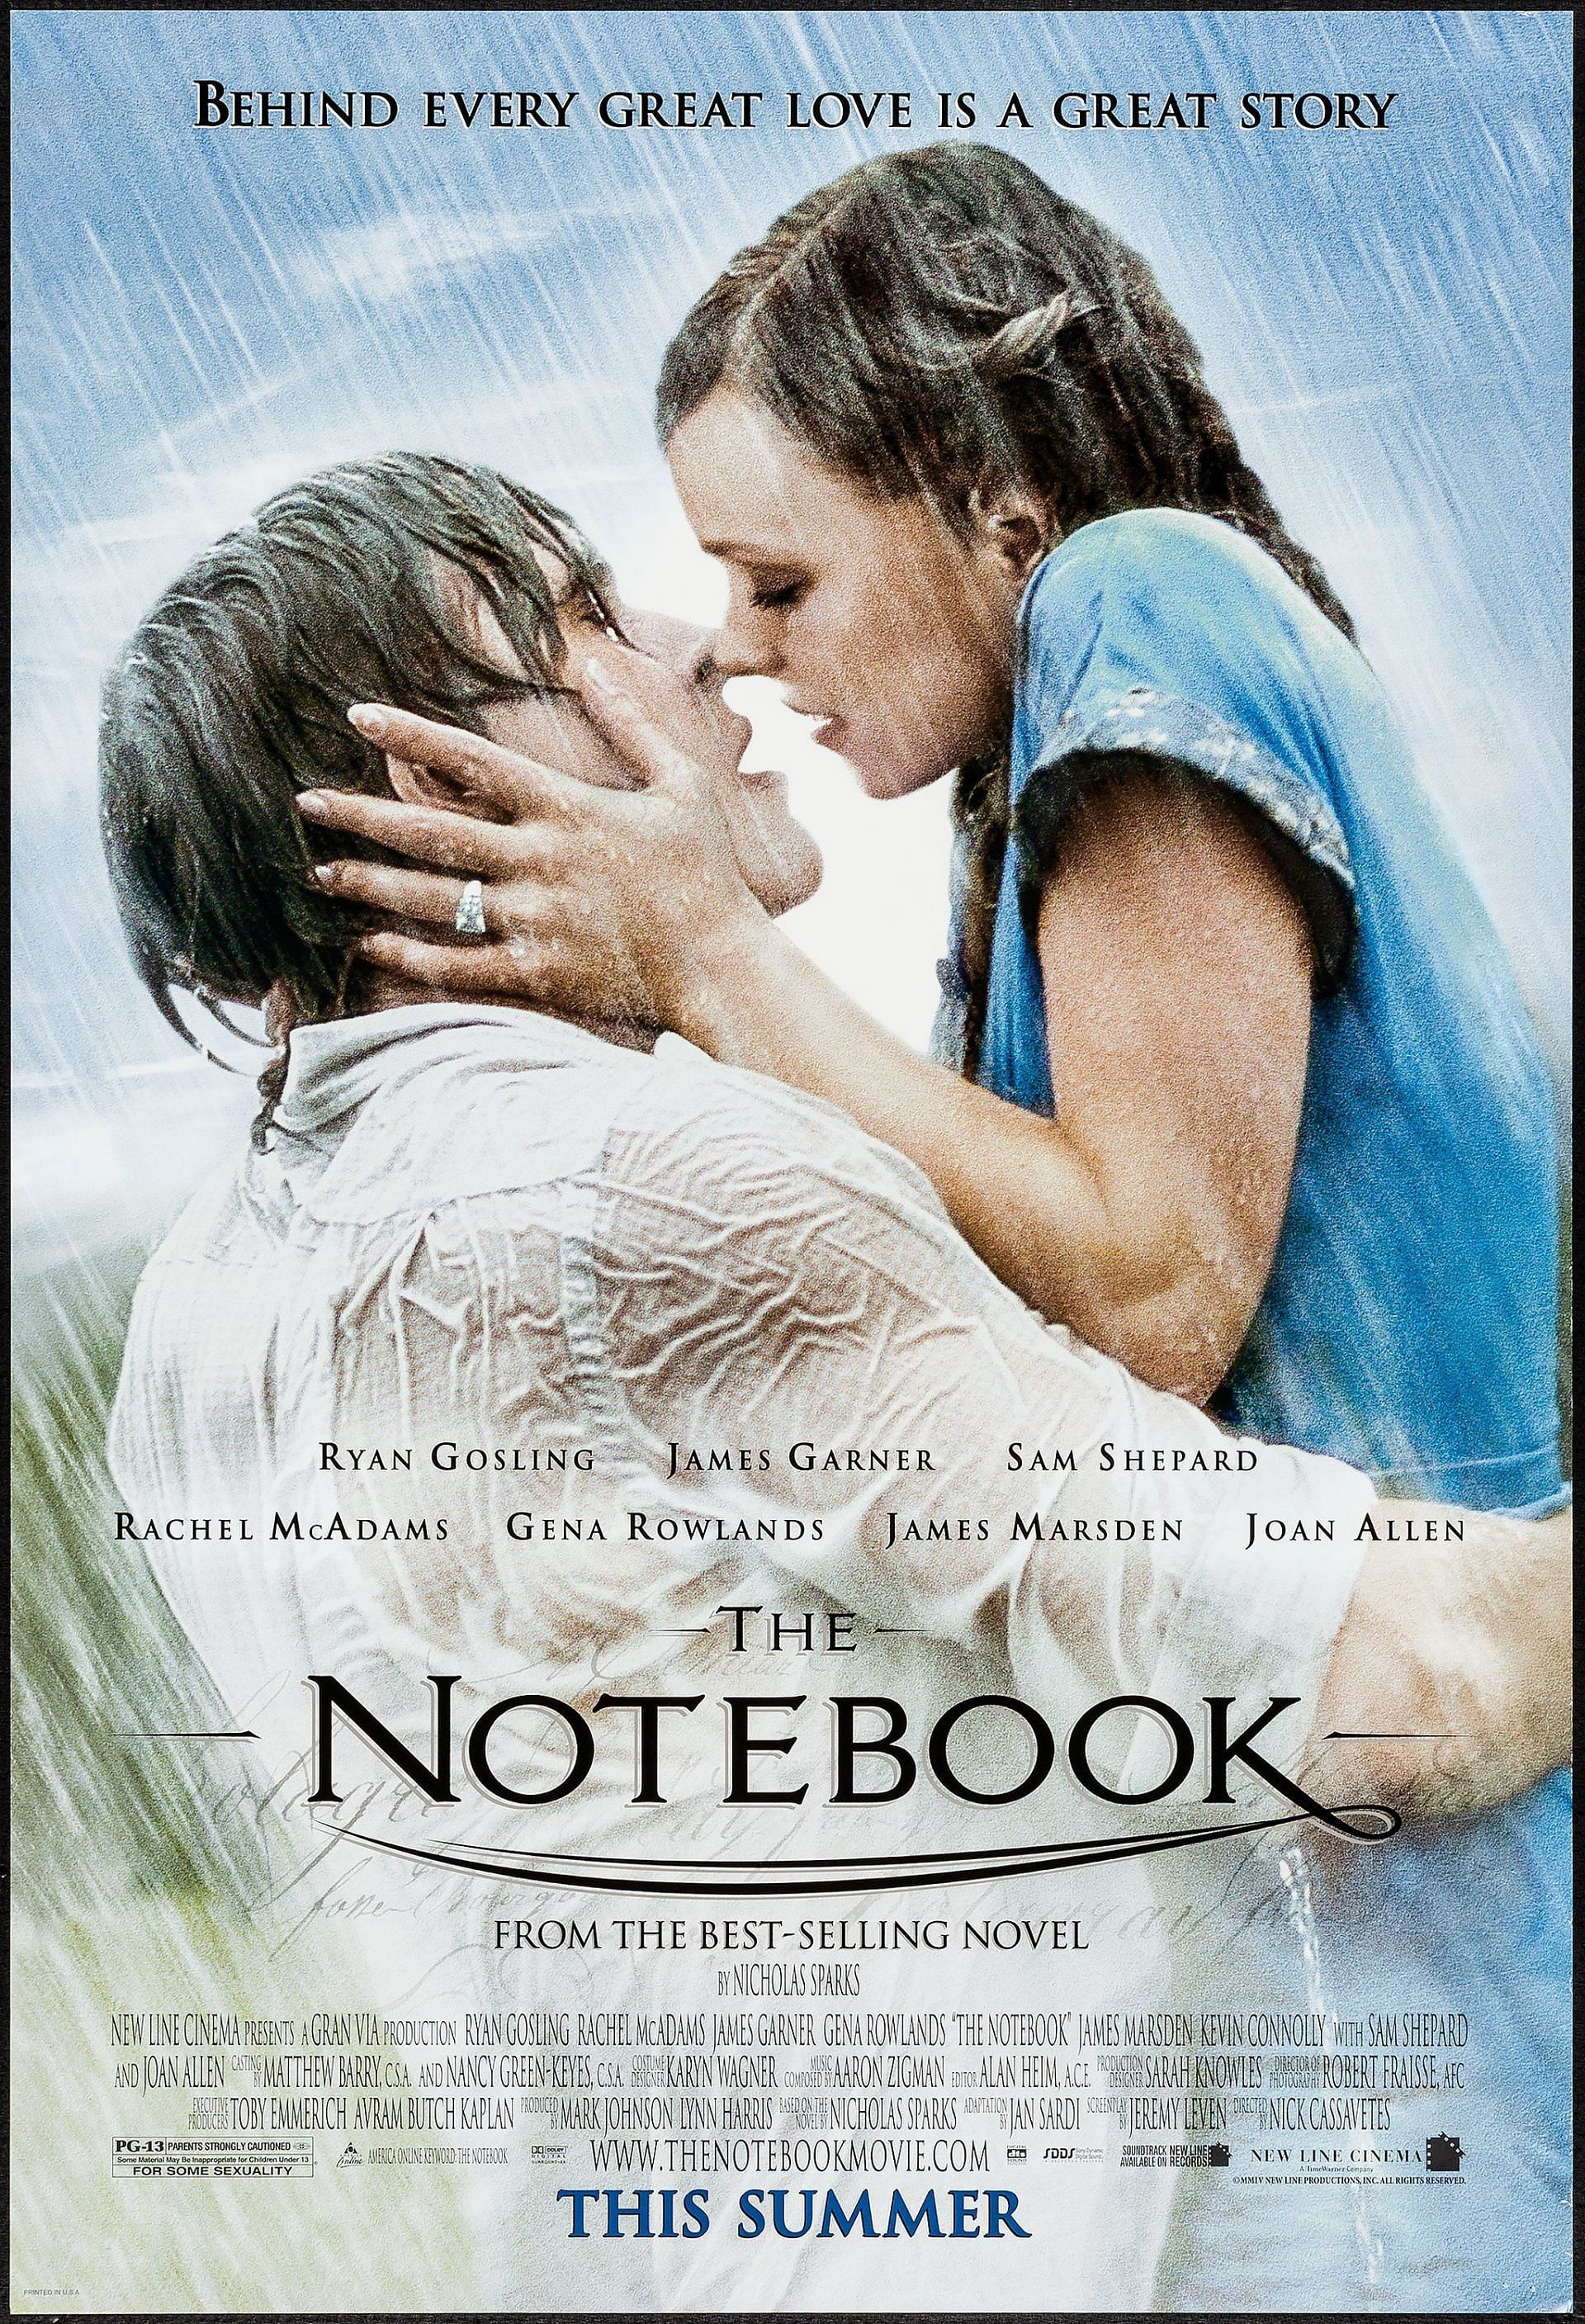 The Notebook (Image via New Line Cinema)